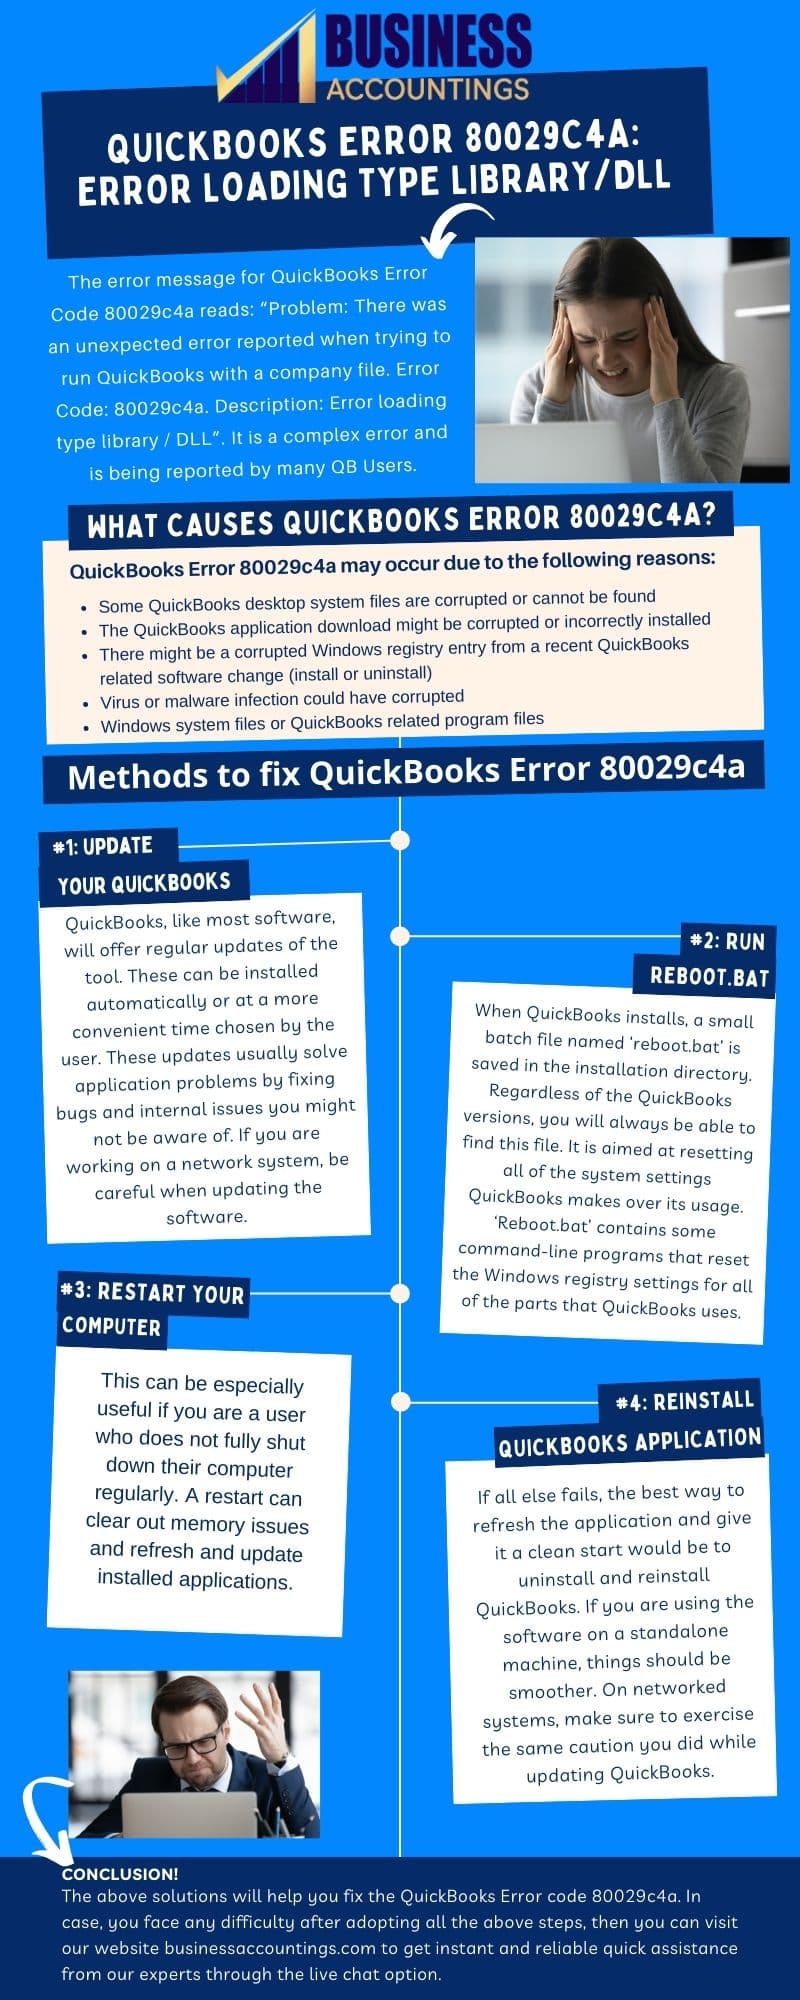 Infographics to Resolve The QuickBooks Error 80029c4a